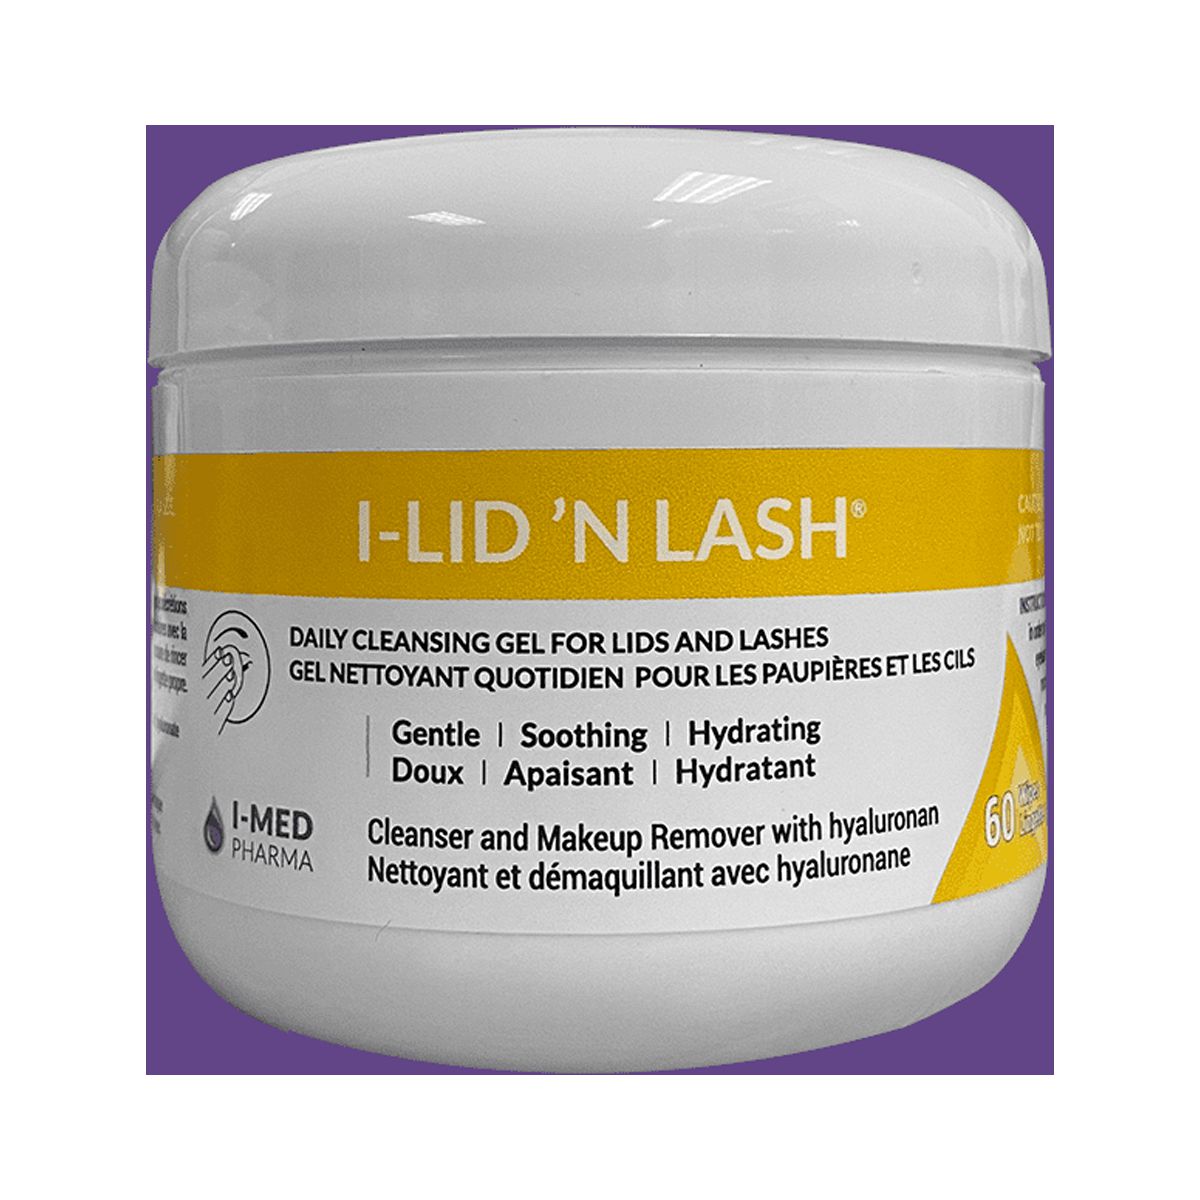 I-Med Pharma I-Lid 'N Lash | Daily Cleansing Gel for Lids and Lashes (60 Wipes) (I-Lid 'N Lash) - image 2 of 3